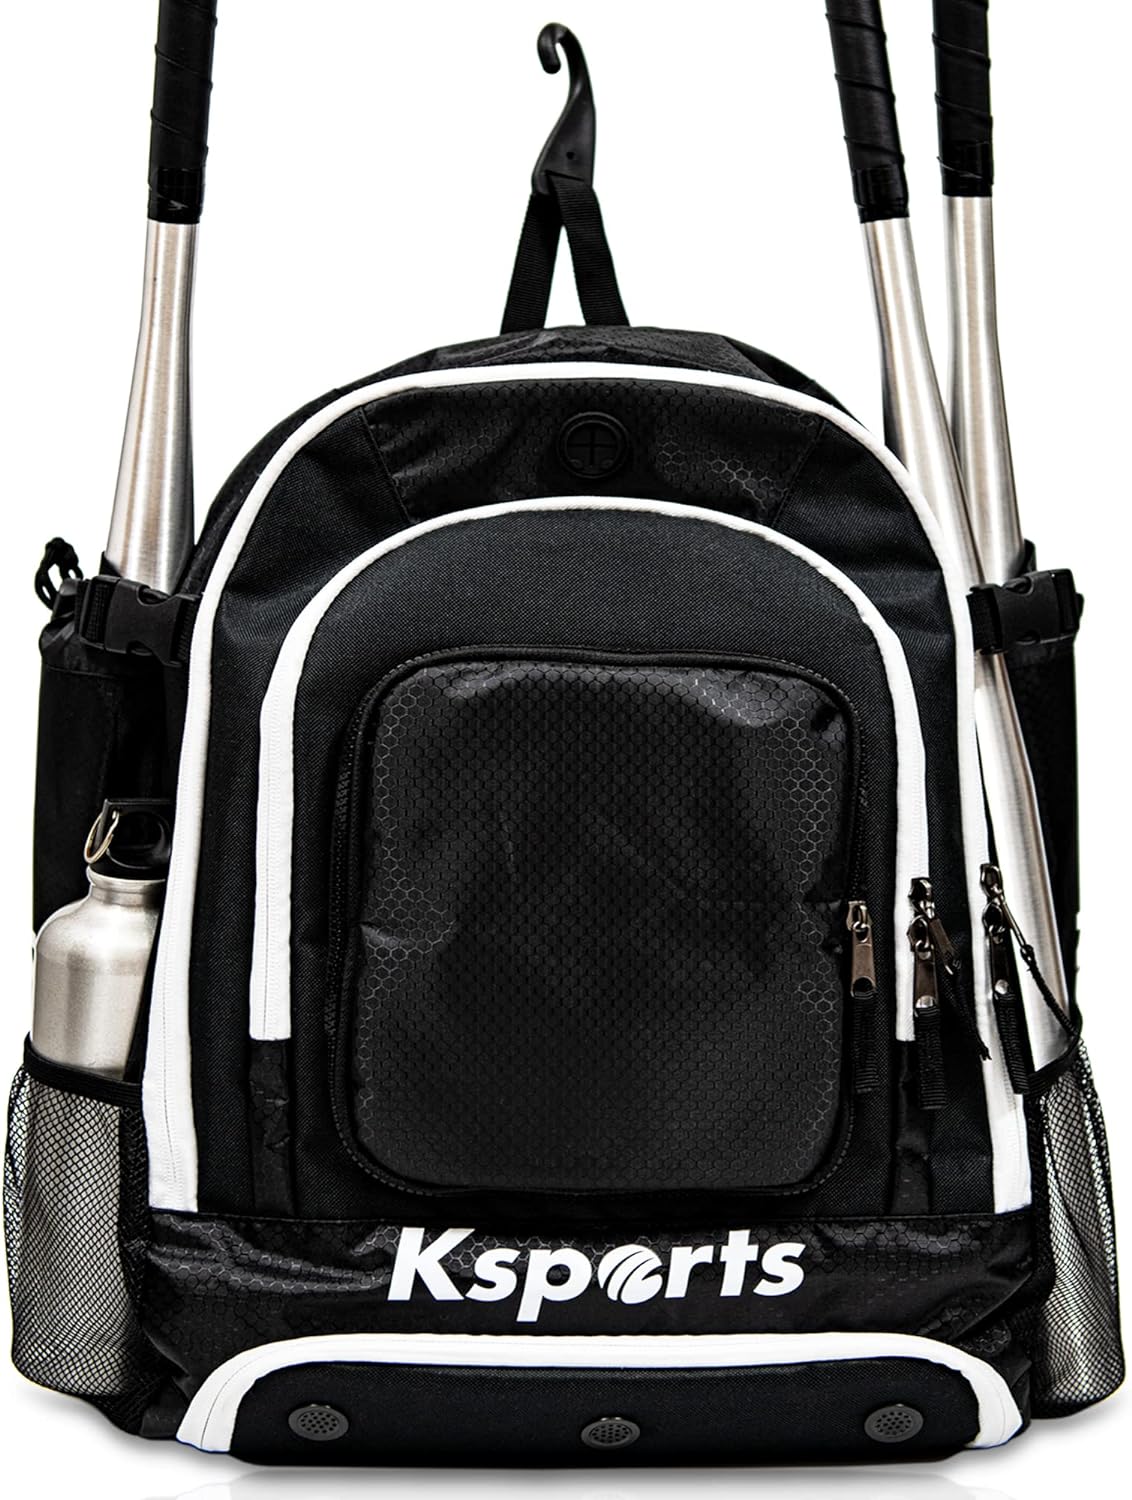 Ksports Baseball Backpack Black with White Zipper